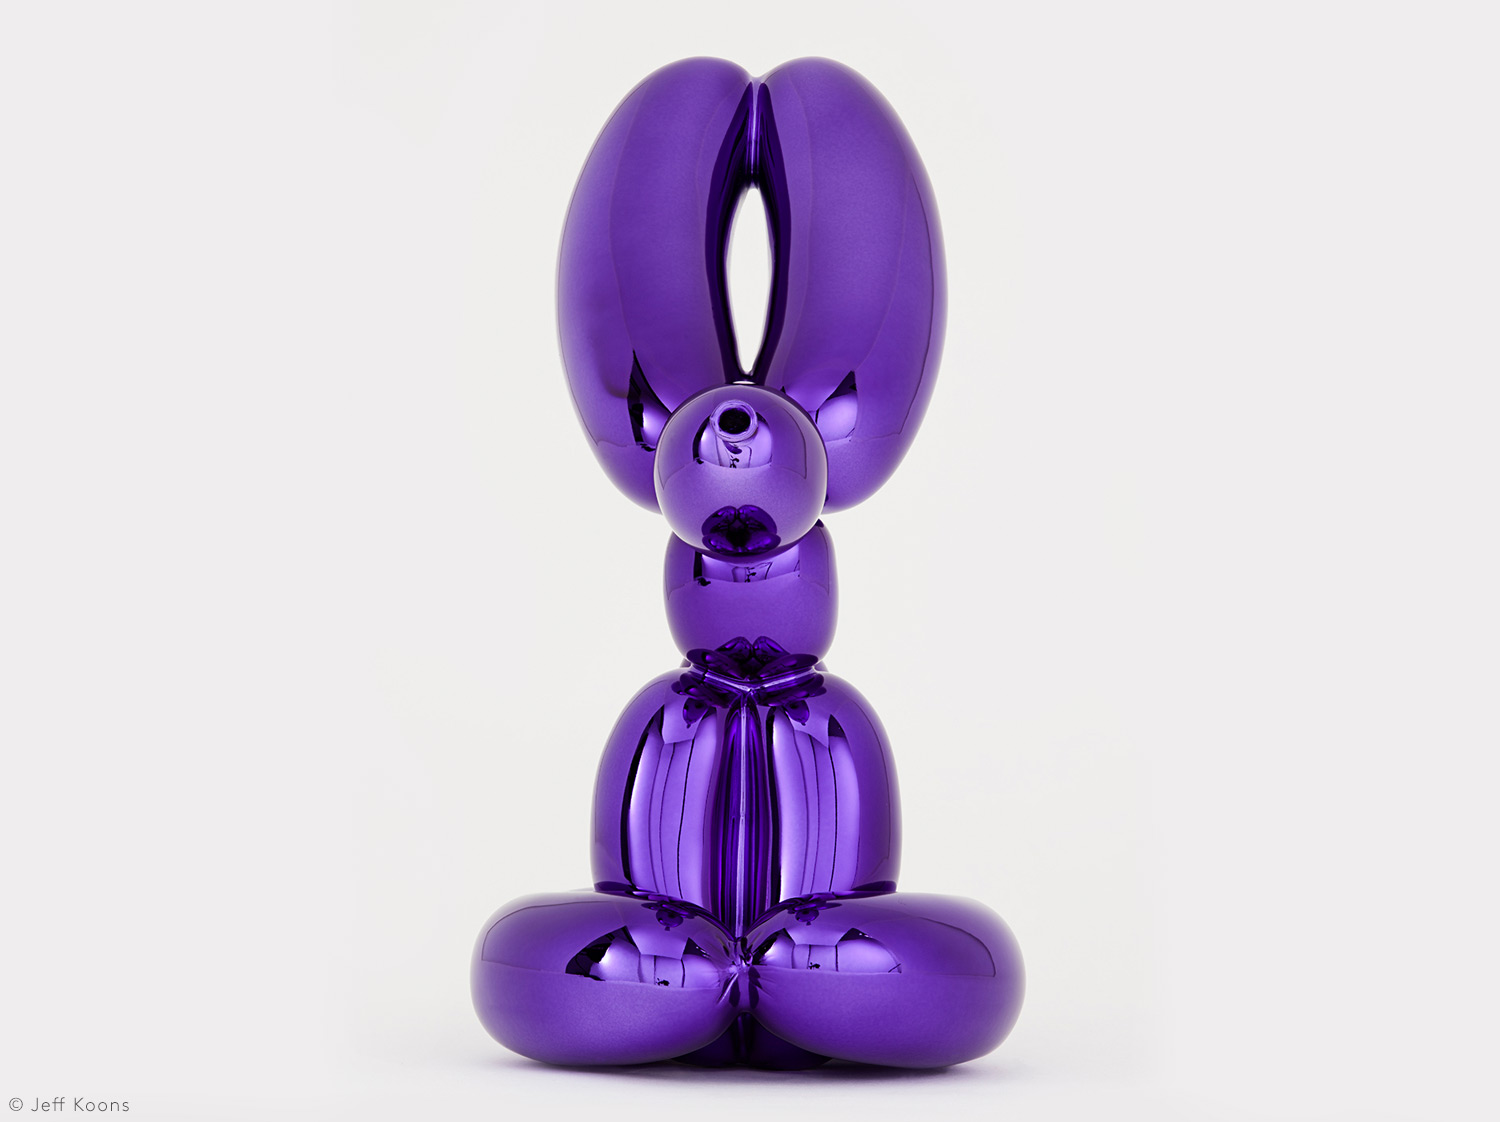 Jeff Koons and Bernardaud New Balloon Dog Piece 2021